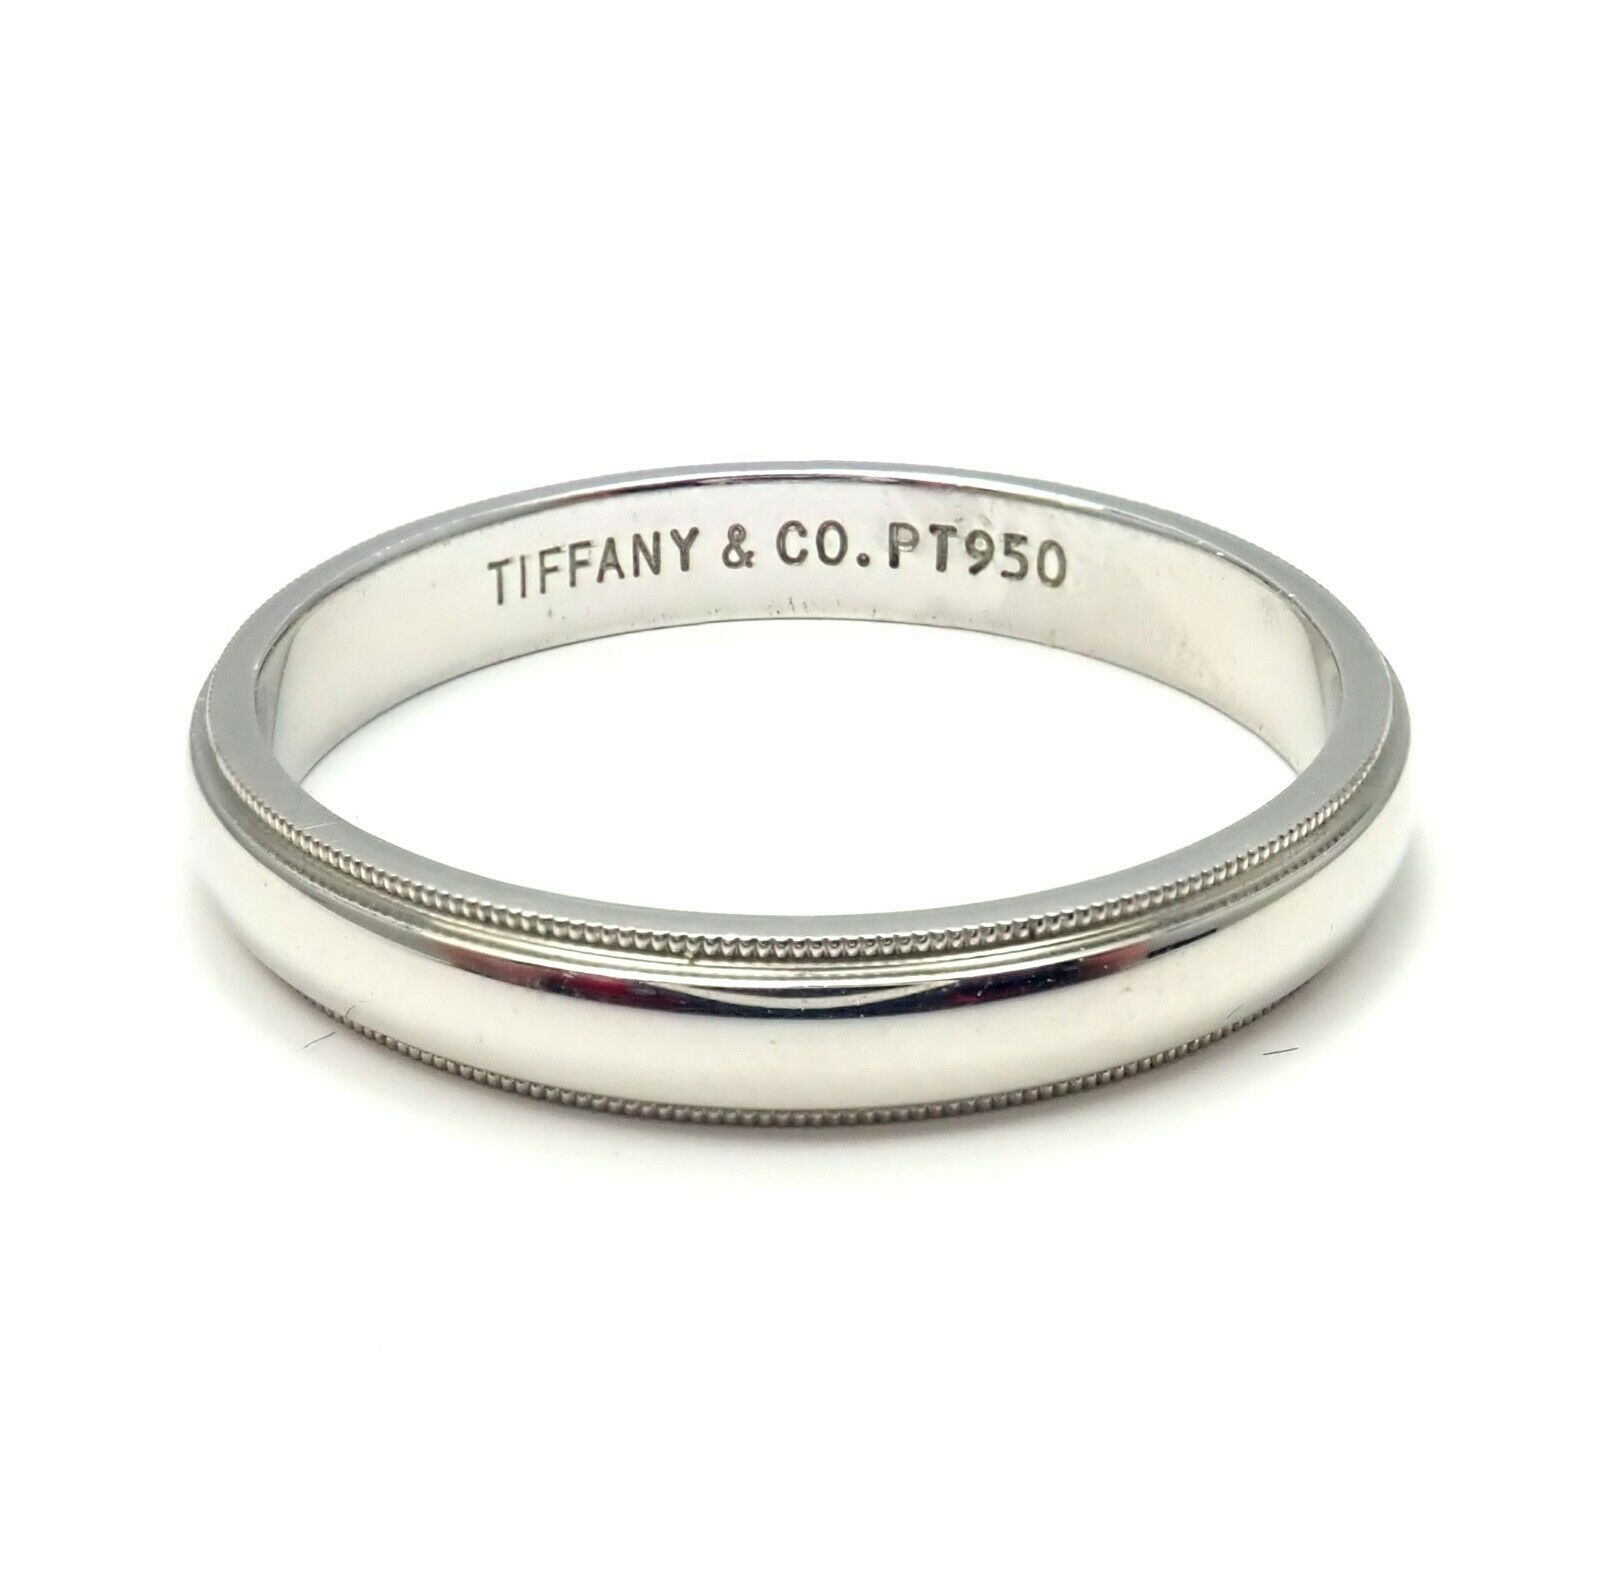 Tiffany & Co. Platinum 4mm Mens Wedding Band Ring Size 14